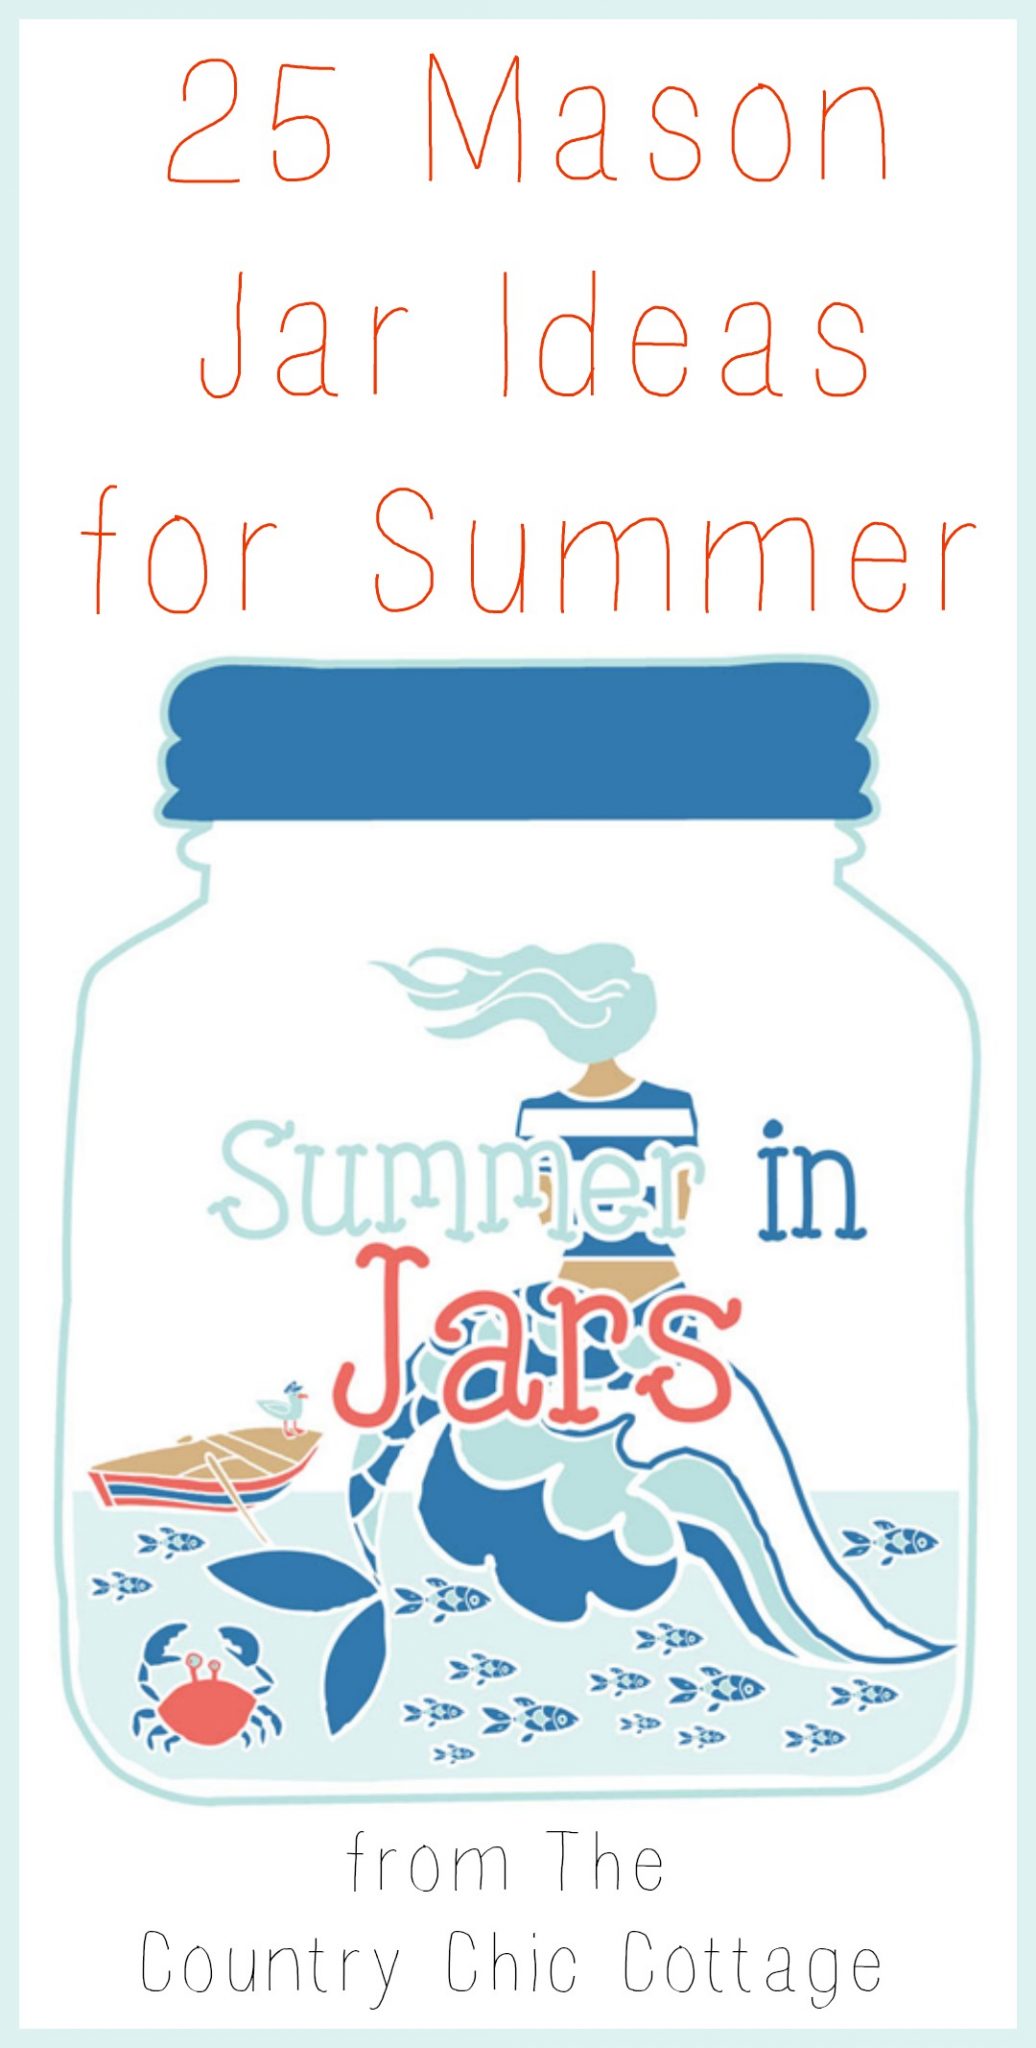 https://www.thecountrychiccottage.net/wp-content/uploads/2015/05/mason-jar-ideas-for-summer.jpg